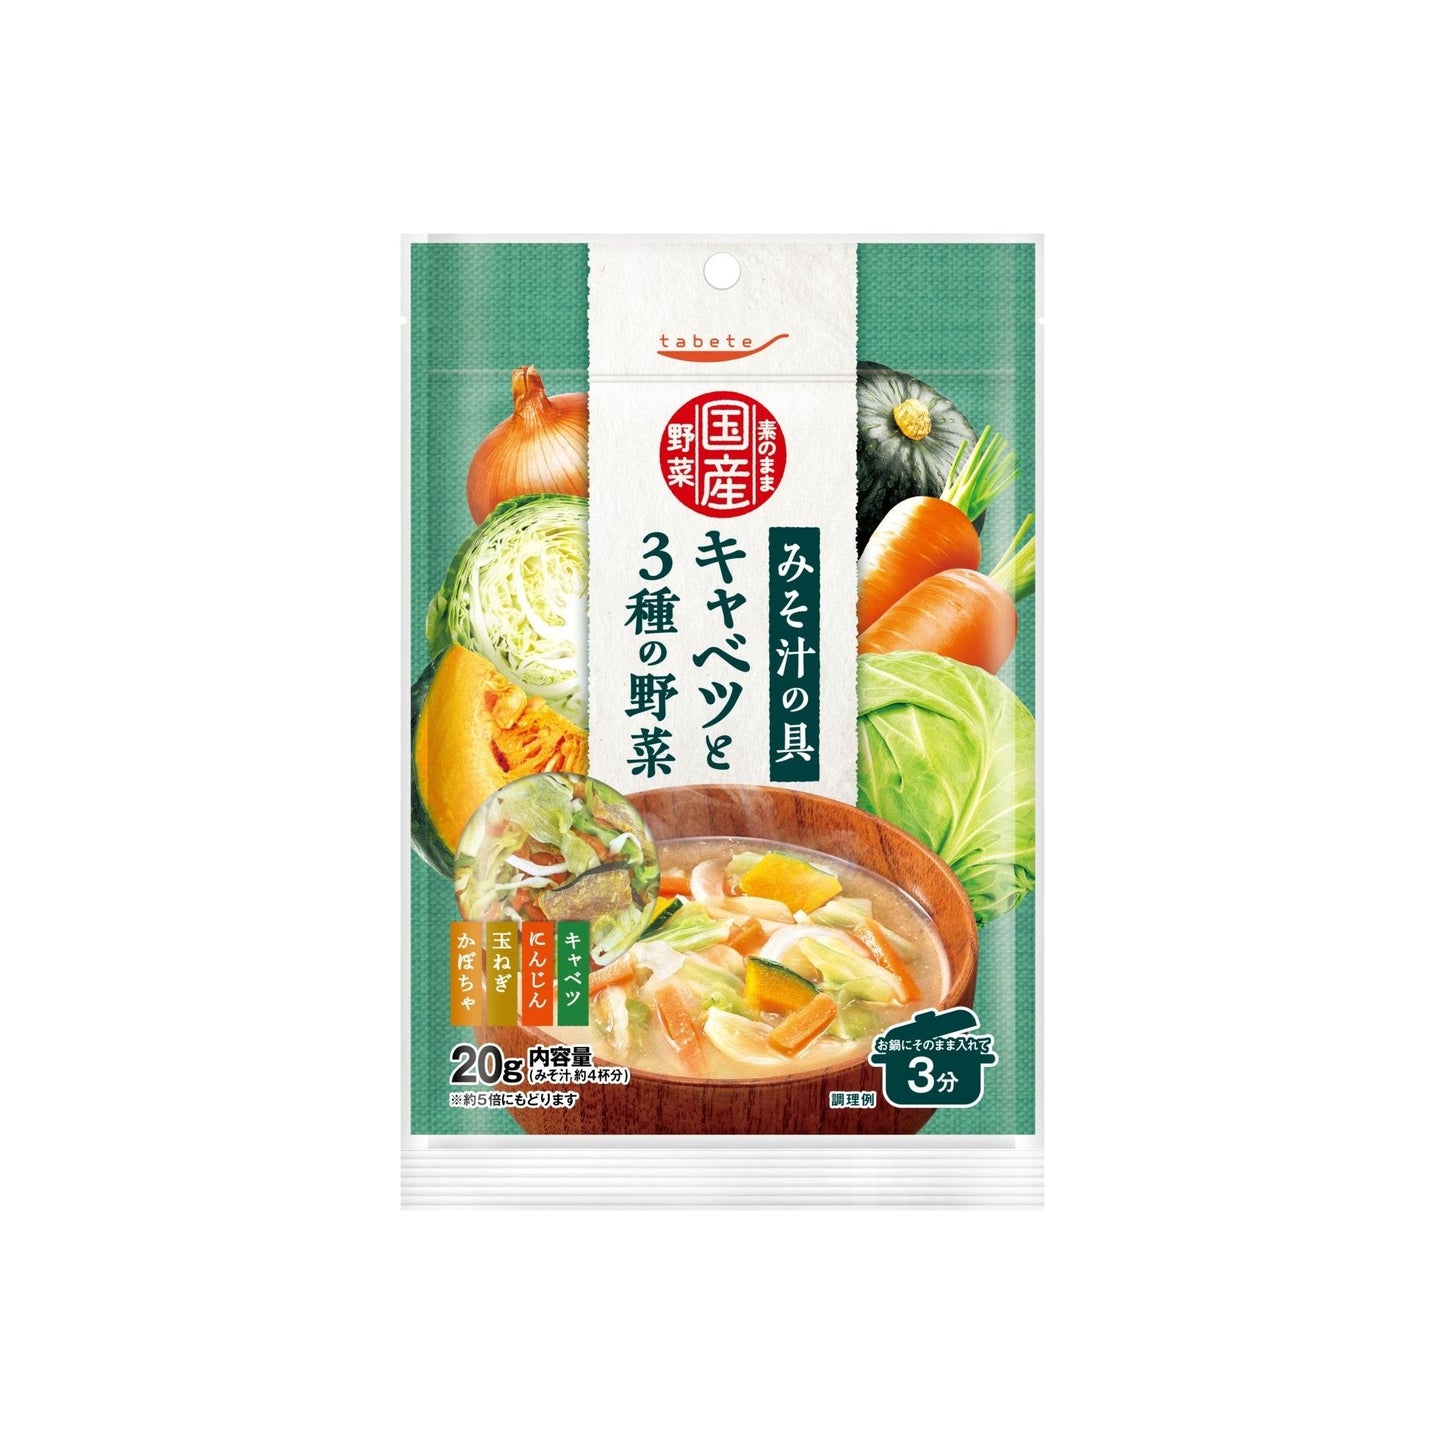 tabete 素のまま国産野菜 みそ汁の具 キャベツと3種の野菜 - ROJI日本橋 ONLINE STORE